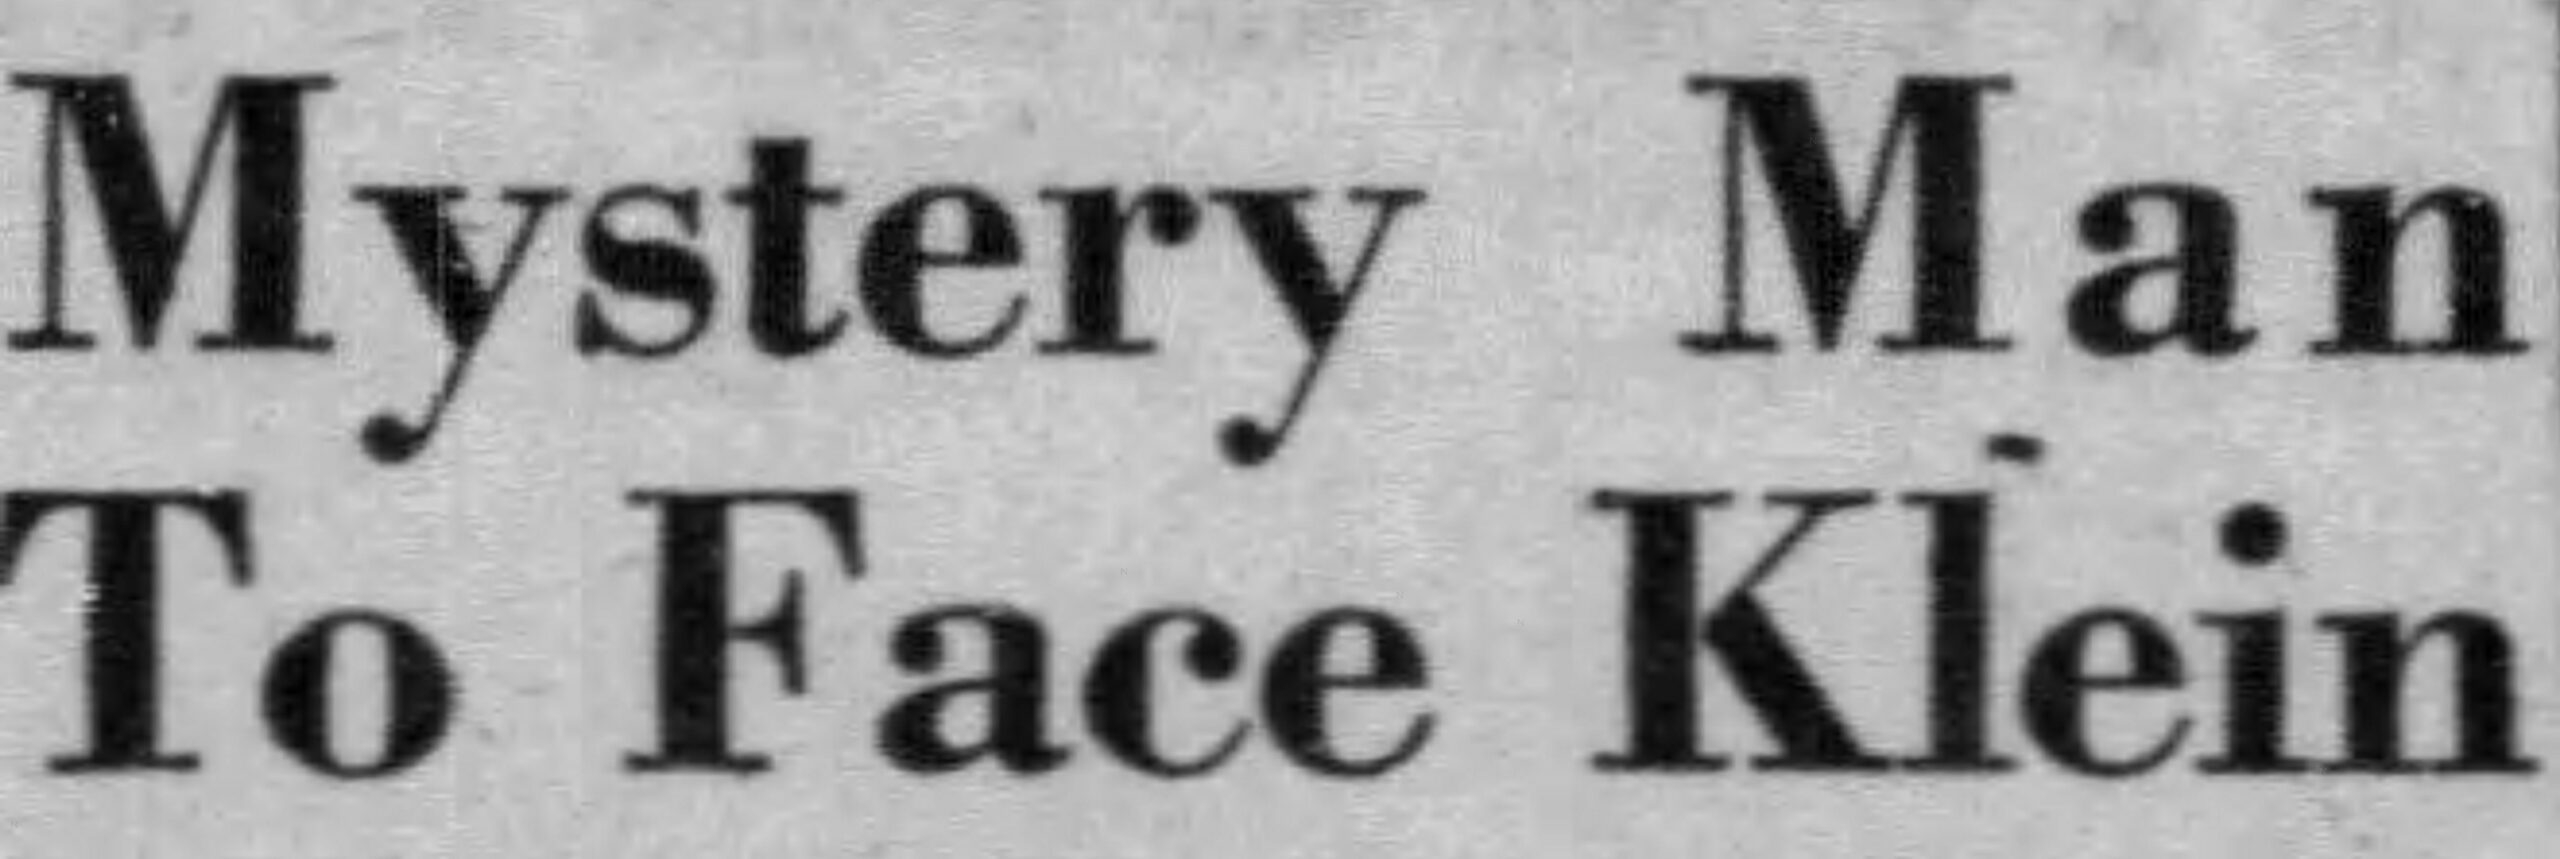 Mystery Man to Face Klein Windsor Star November 9, 1956